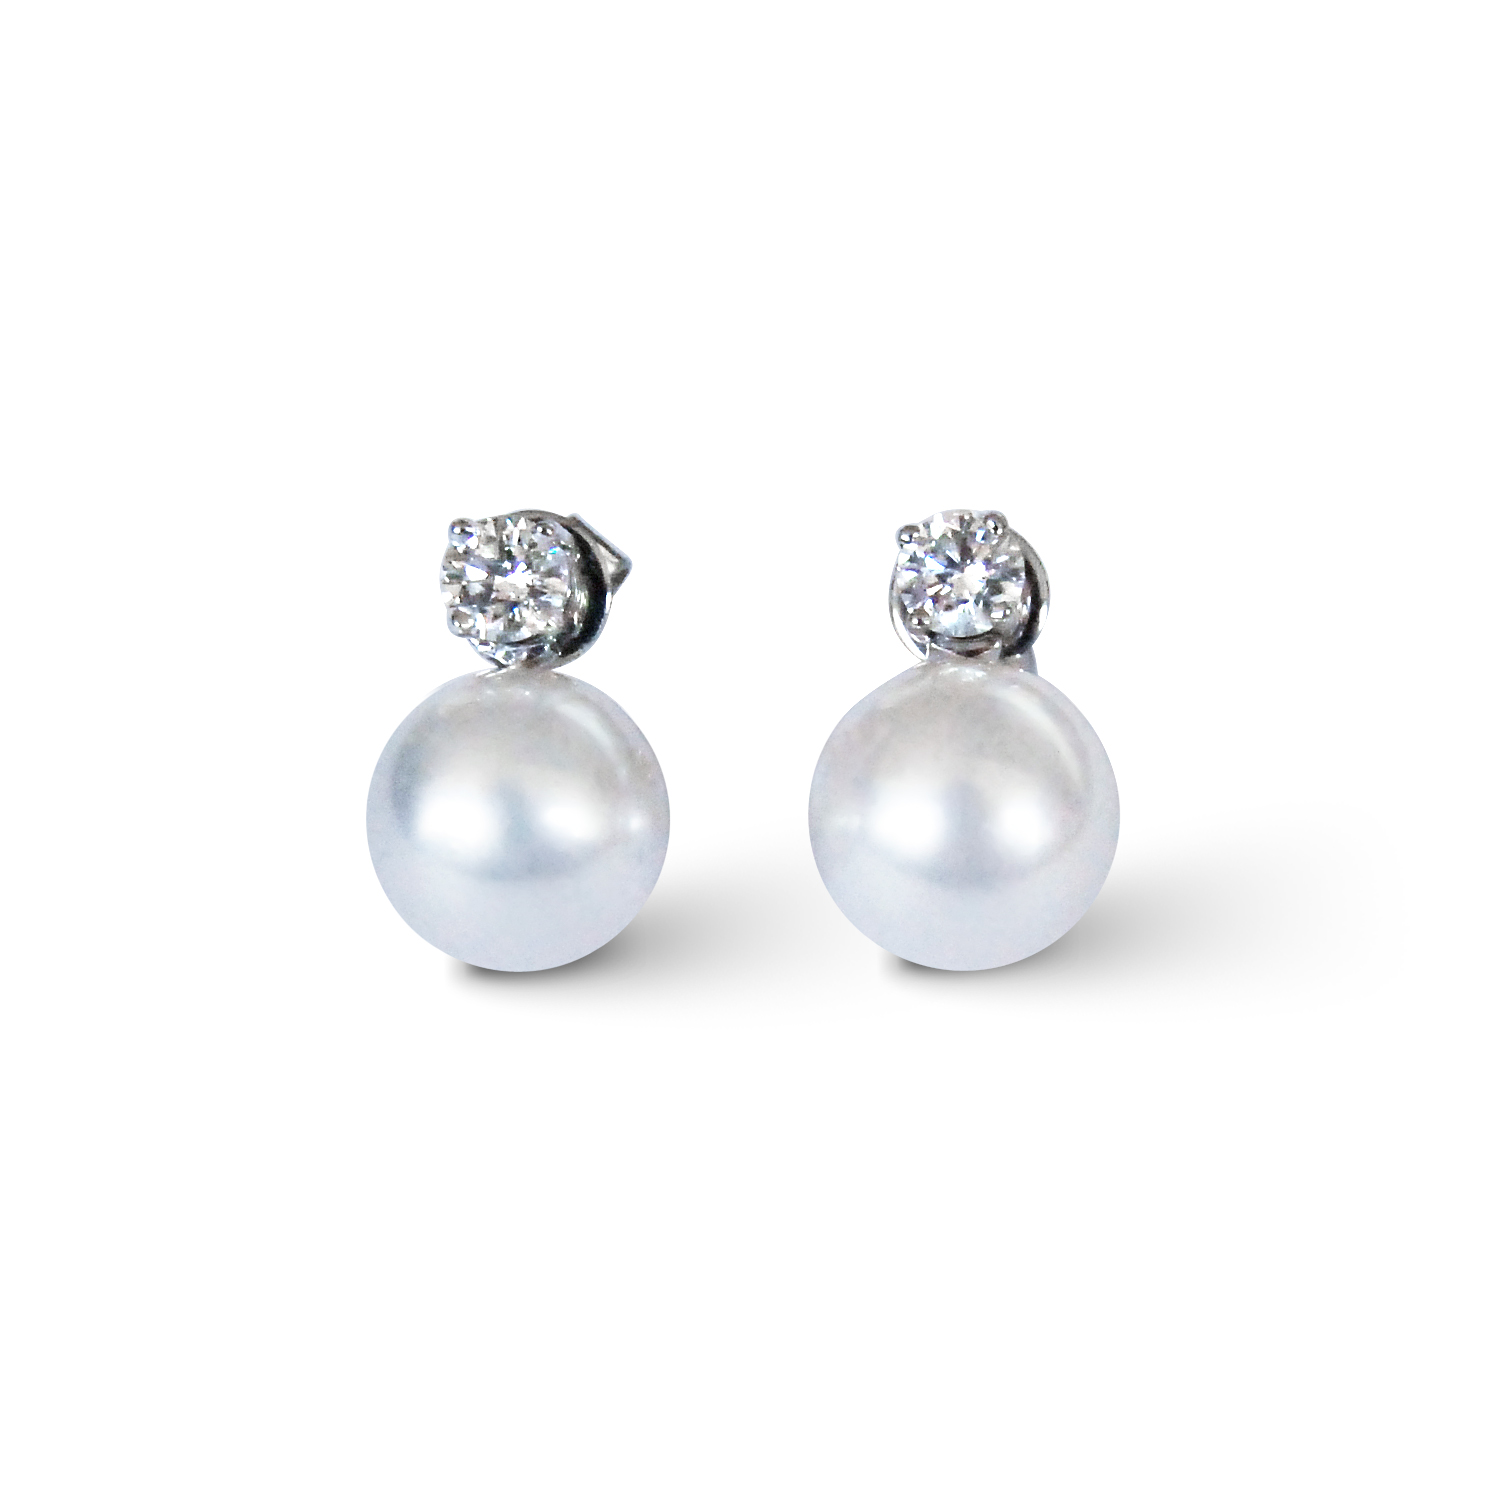 Brilliant-cut-diamond-and-pearl-earrings-18ct-white-gold-2.jpg